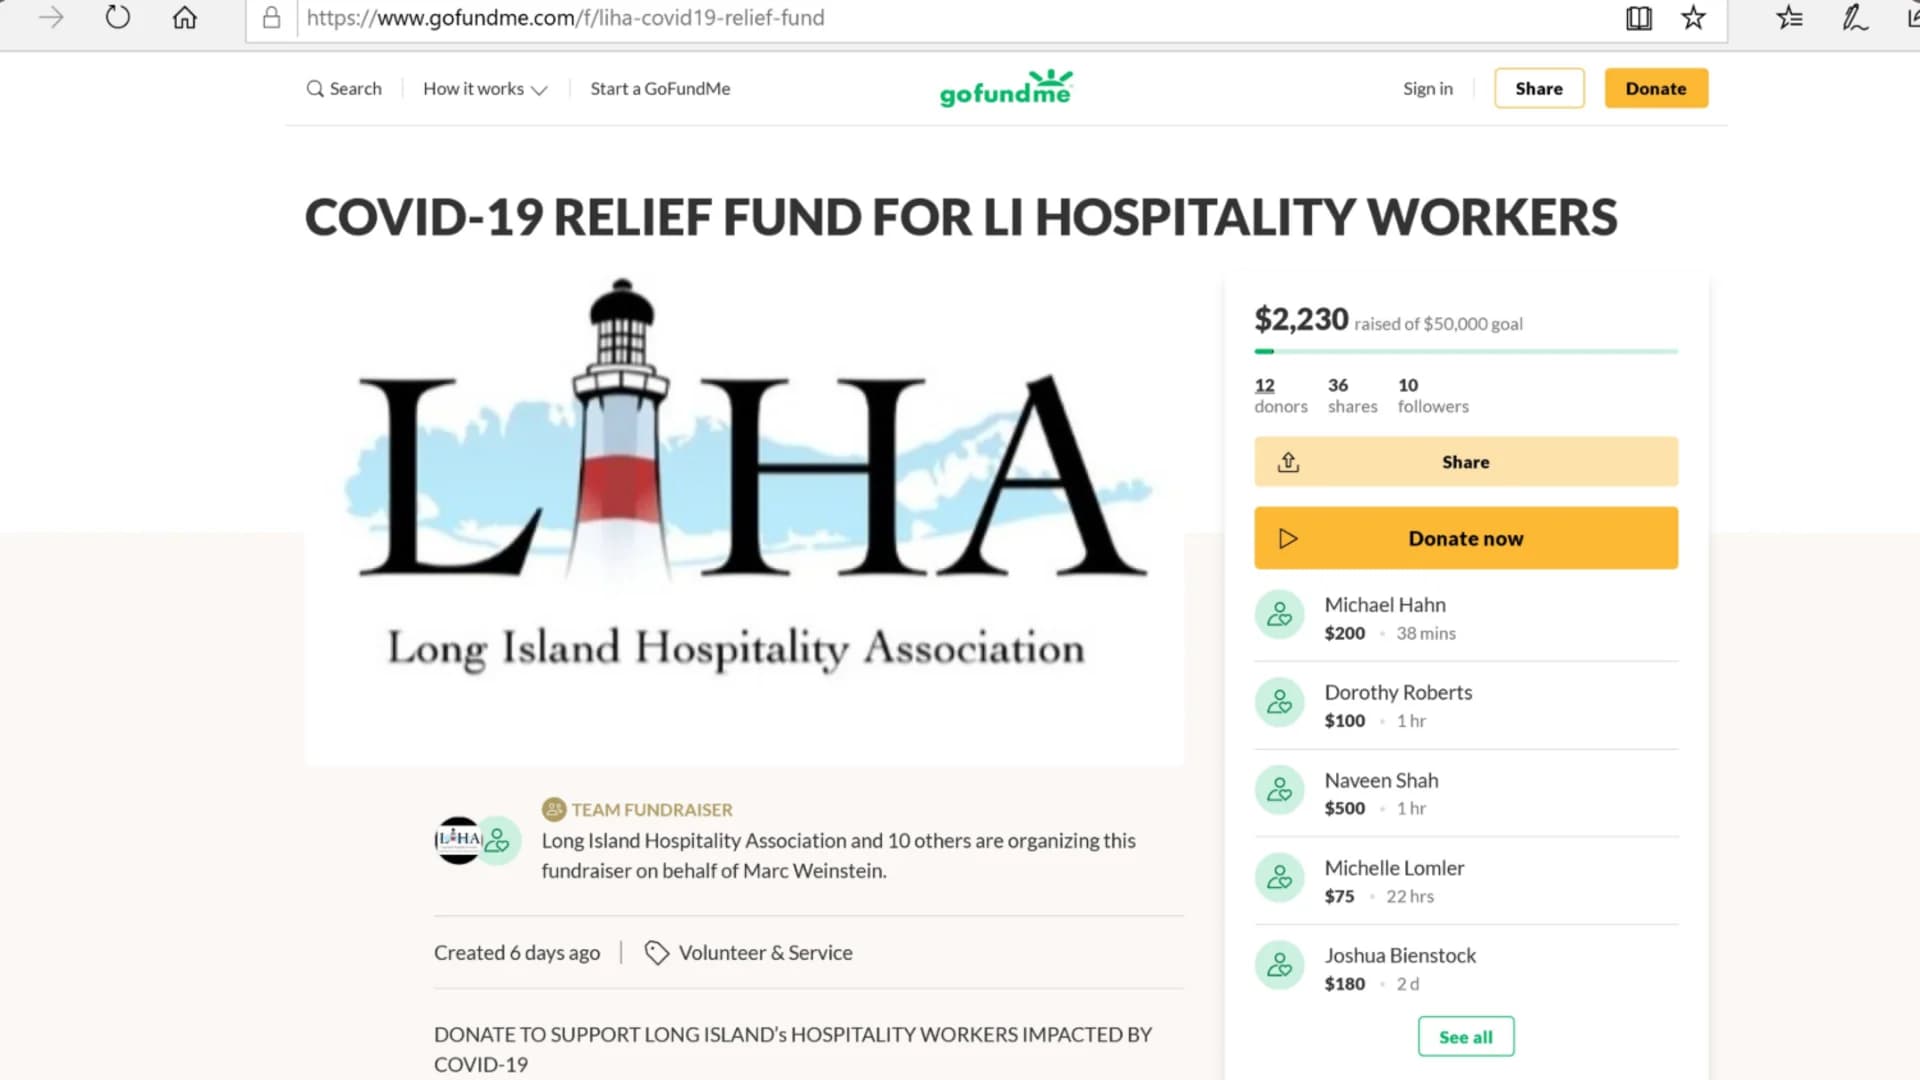 LI Hospitality Association starts GoFundMe to raise money for hospitality workers